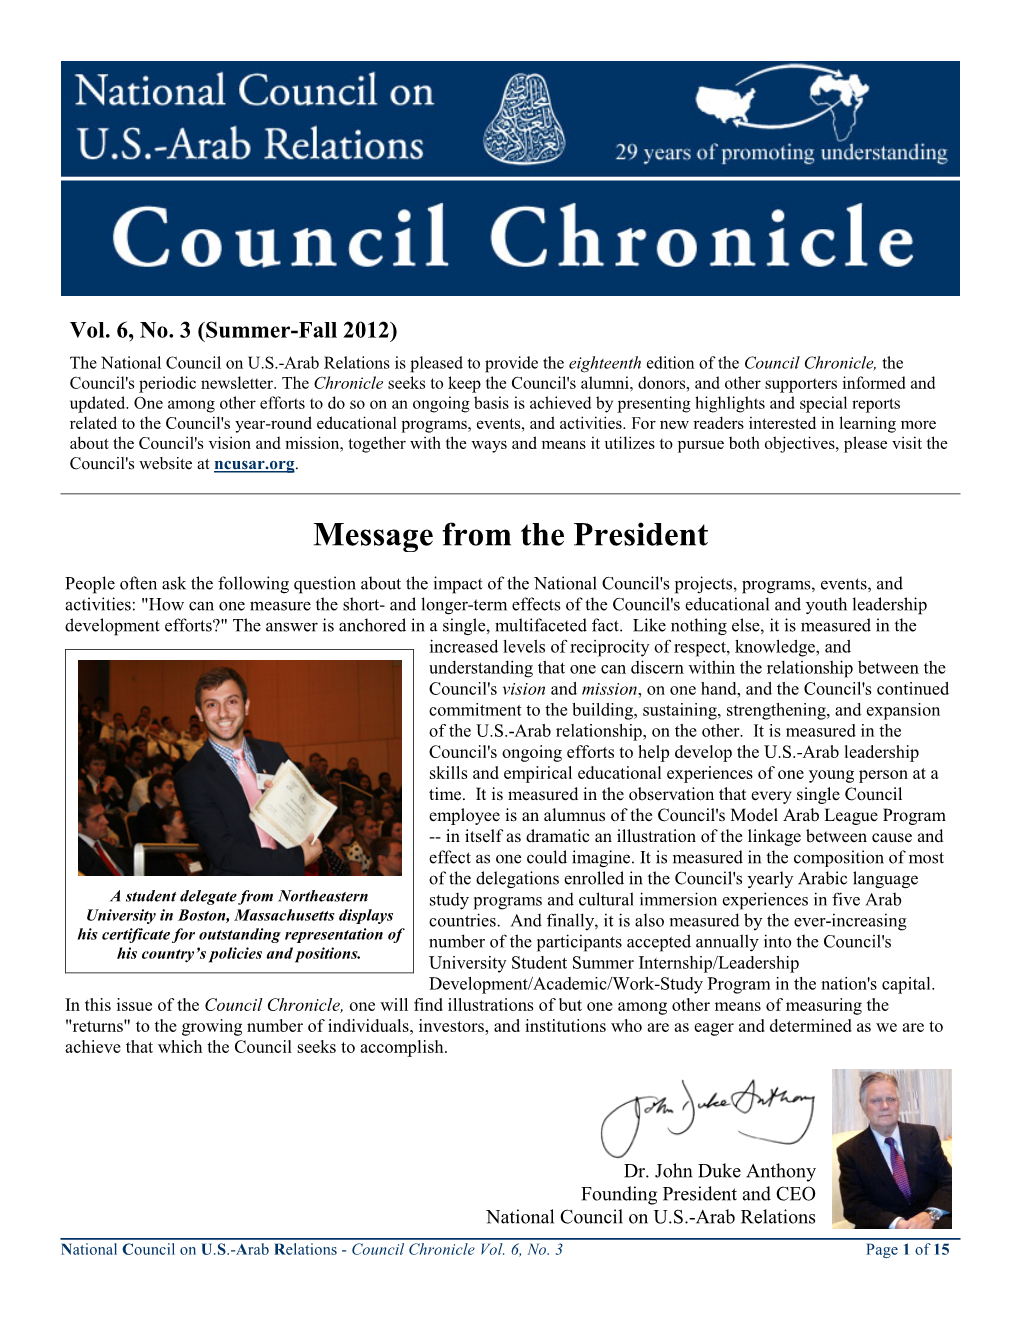 Council Chronicle Vol. 6, No. 3 (Summer-Fall 2012)